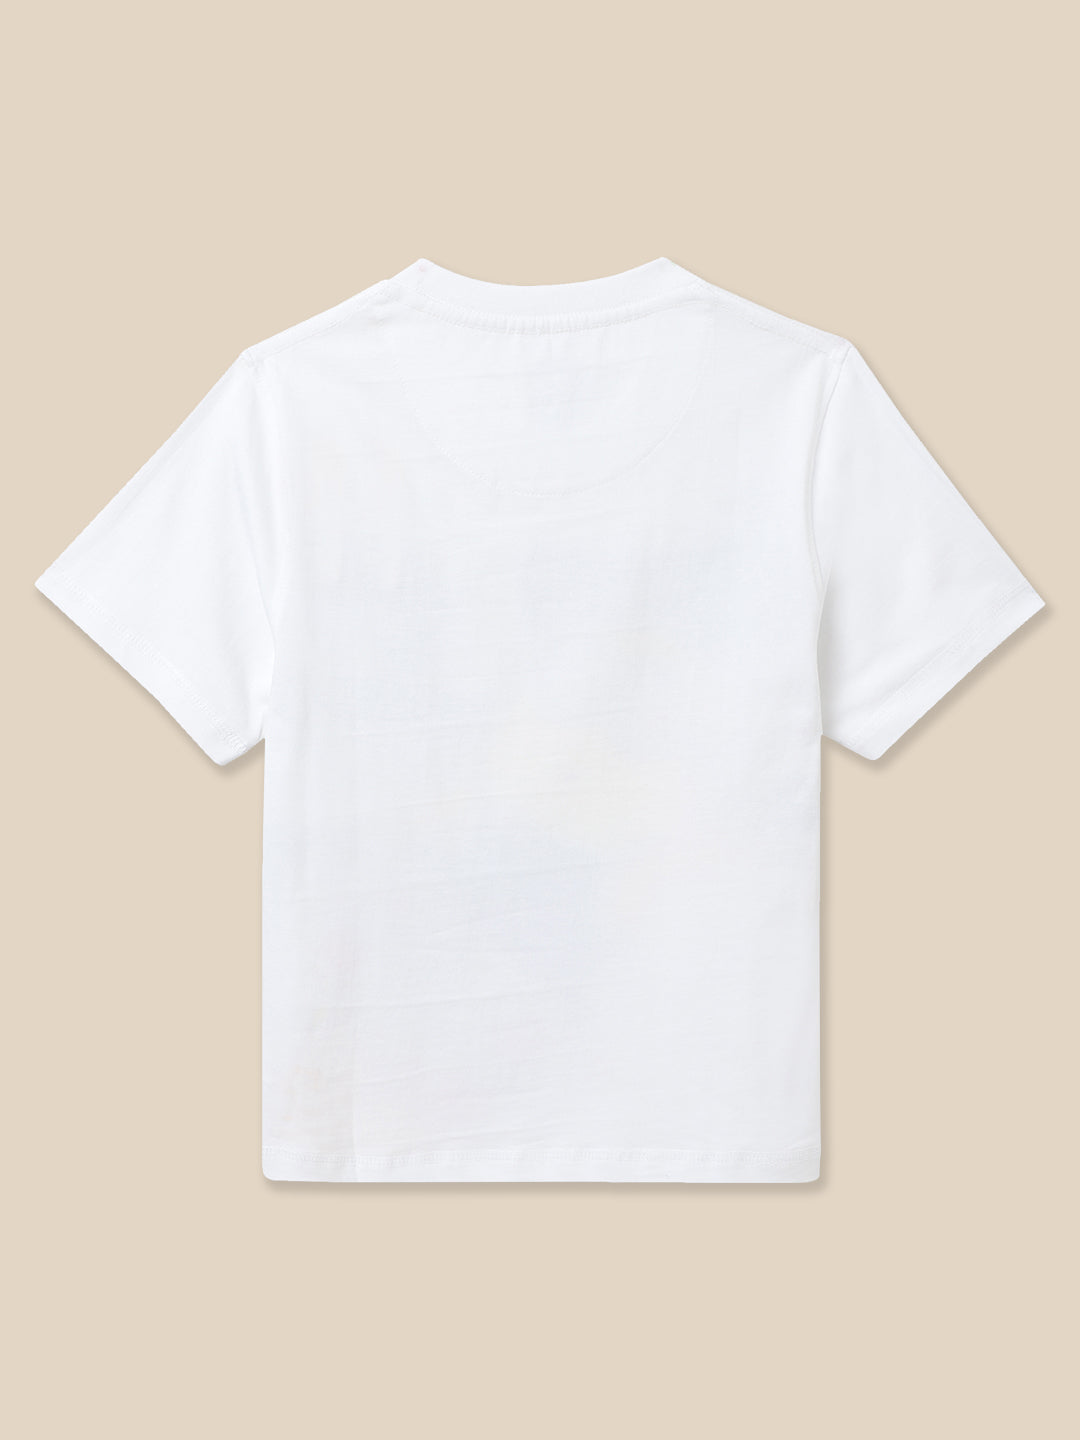 Kidsville Minions Printed White Tshirt For Boys